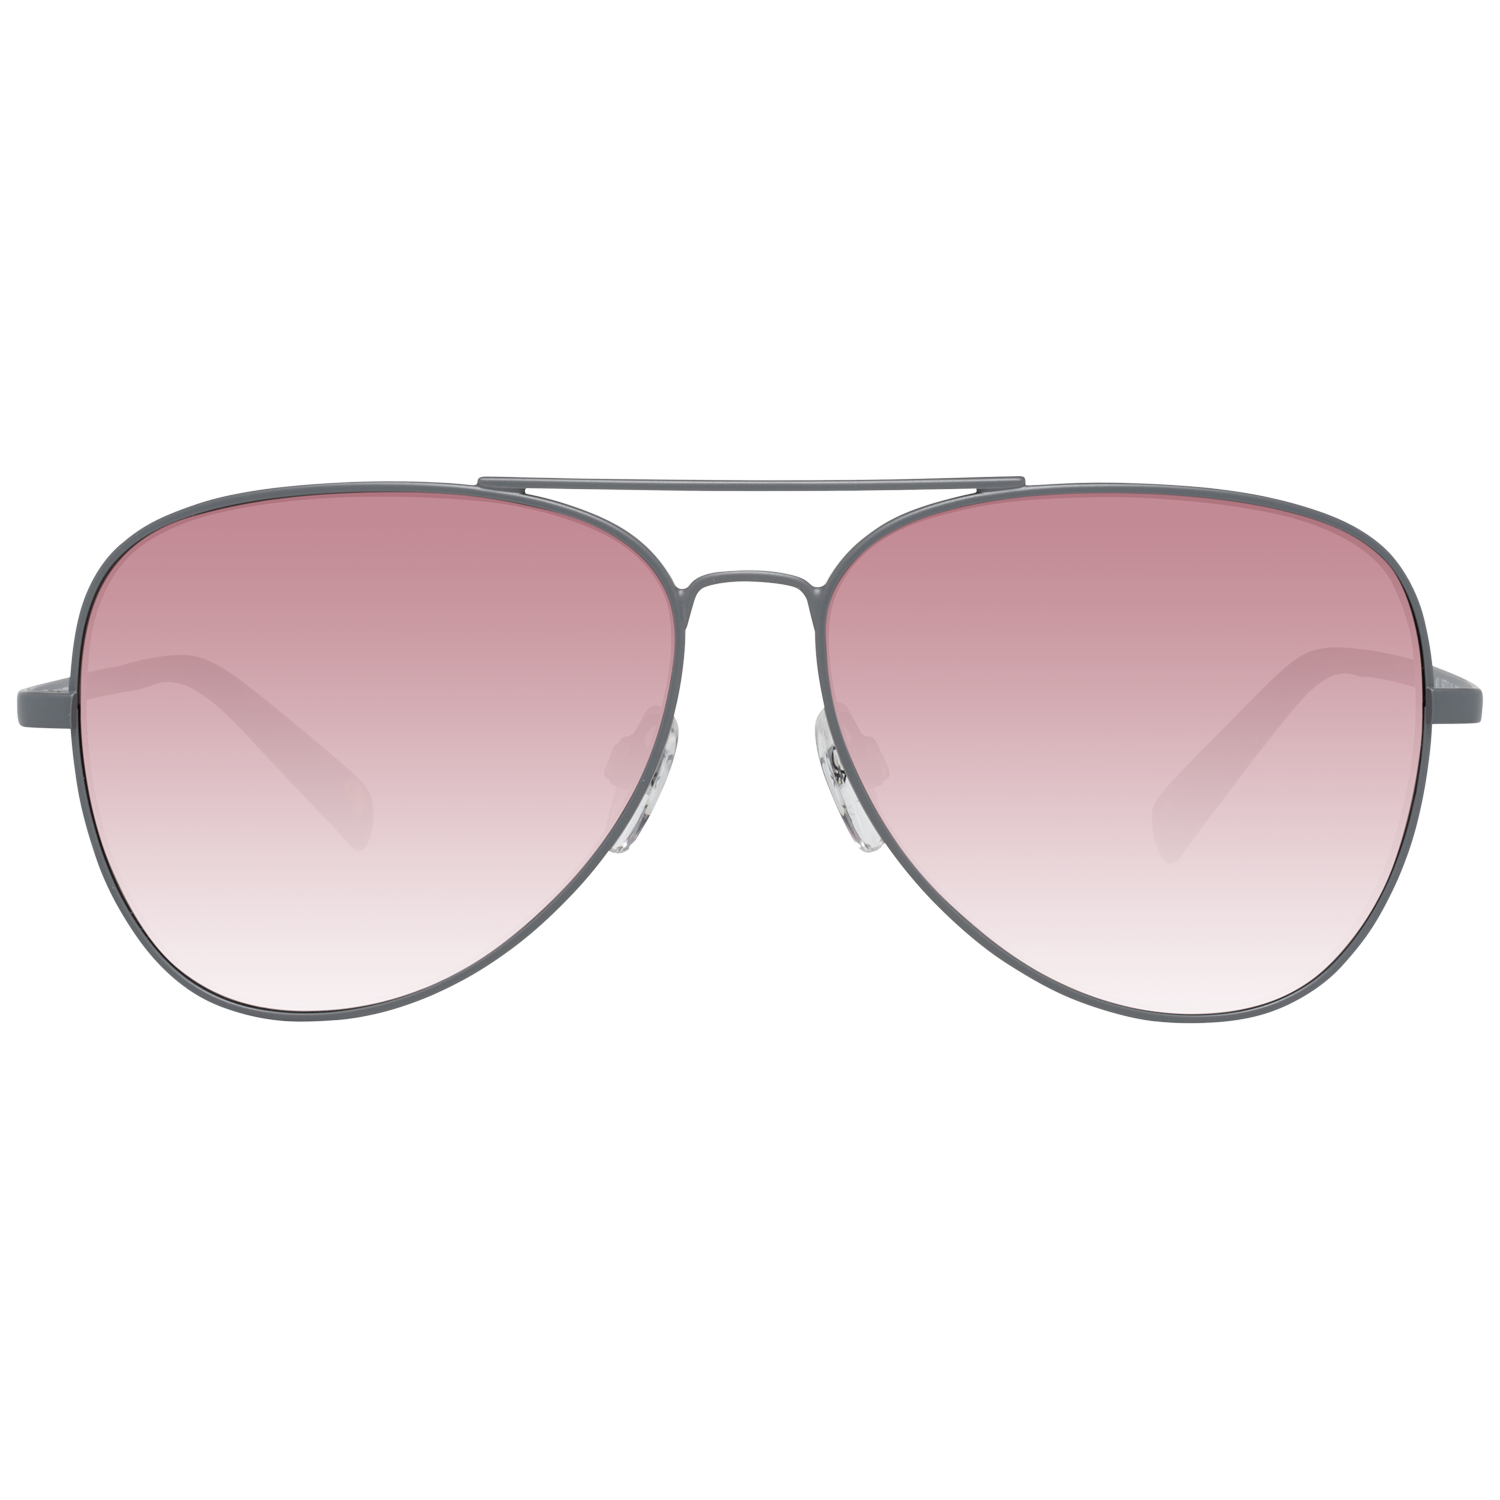 Benetton Sunglasses Benetton Sunglasses BE7011 401 59 Matte Grey Eyeglasses Eyewear UK USA Australia 